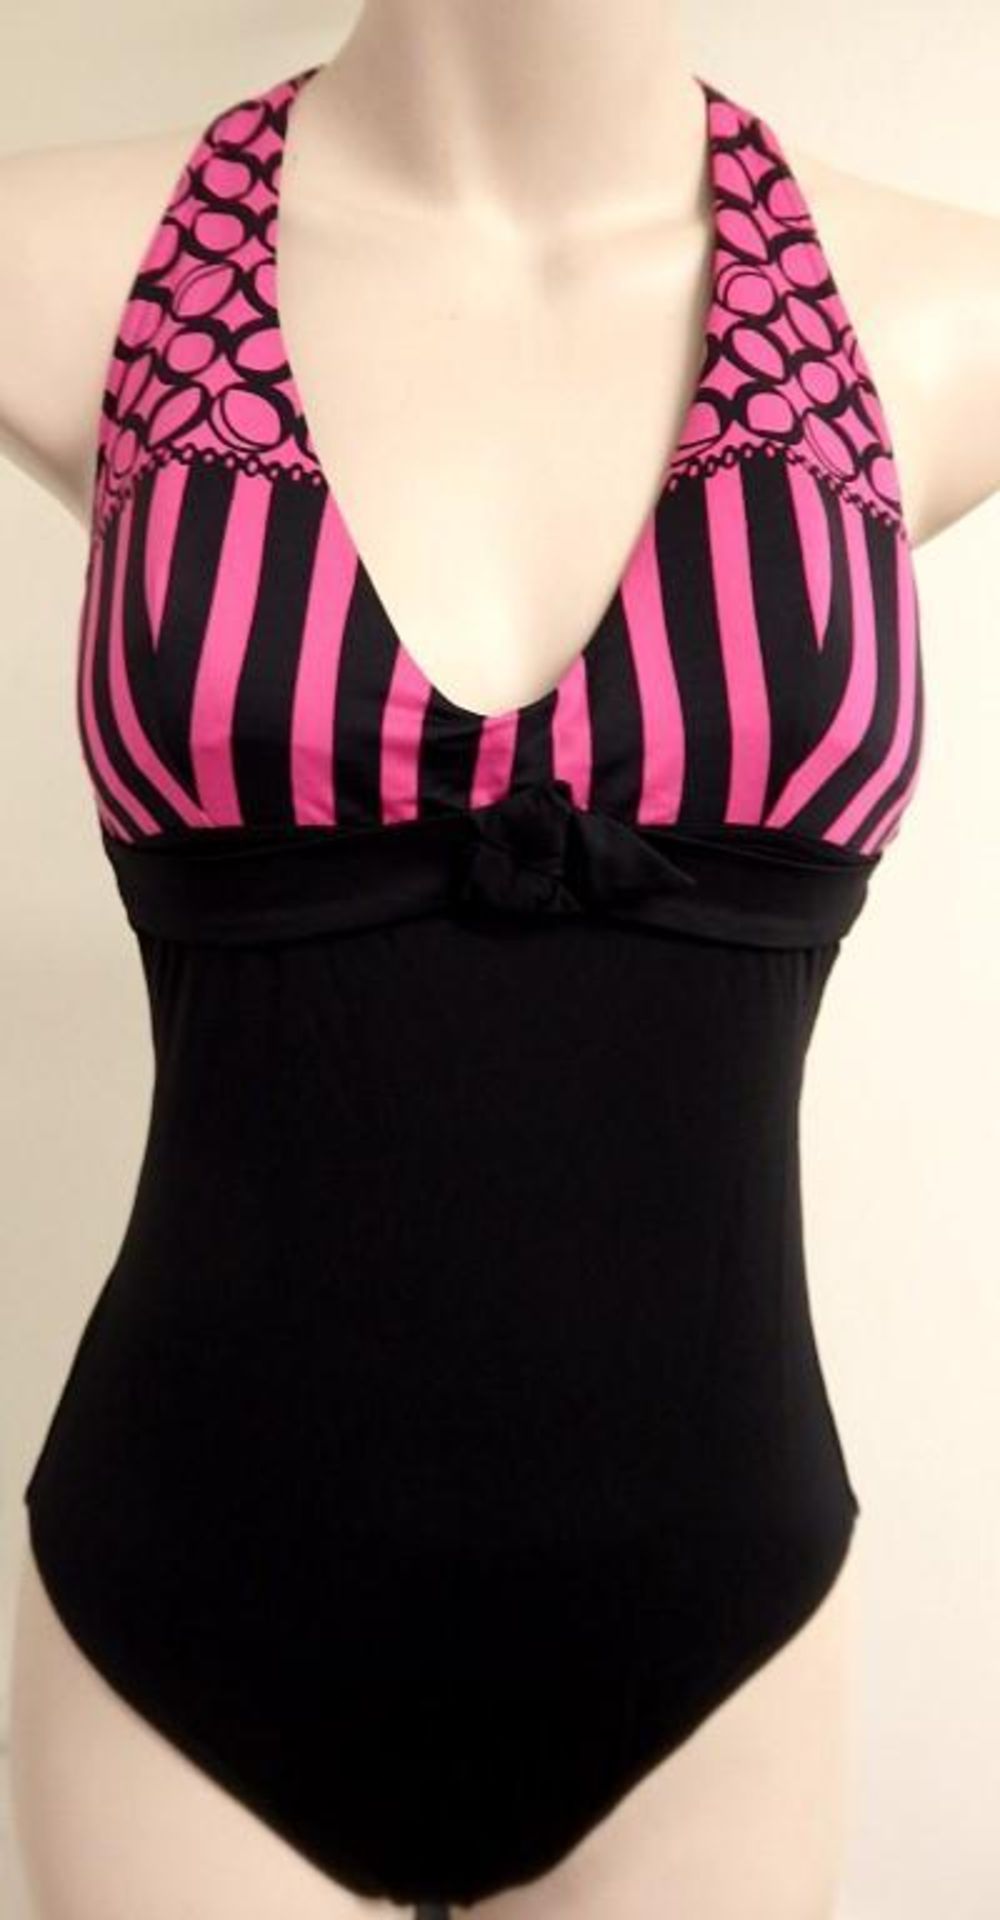 1 x Rasurel - Black/Pink patterned - Borneo Swimsuit - R20434 - Size 2C - UK 32 - Fr 85 - EU/Int 70 - Image 4 of 7